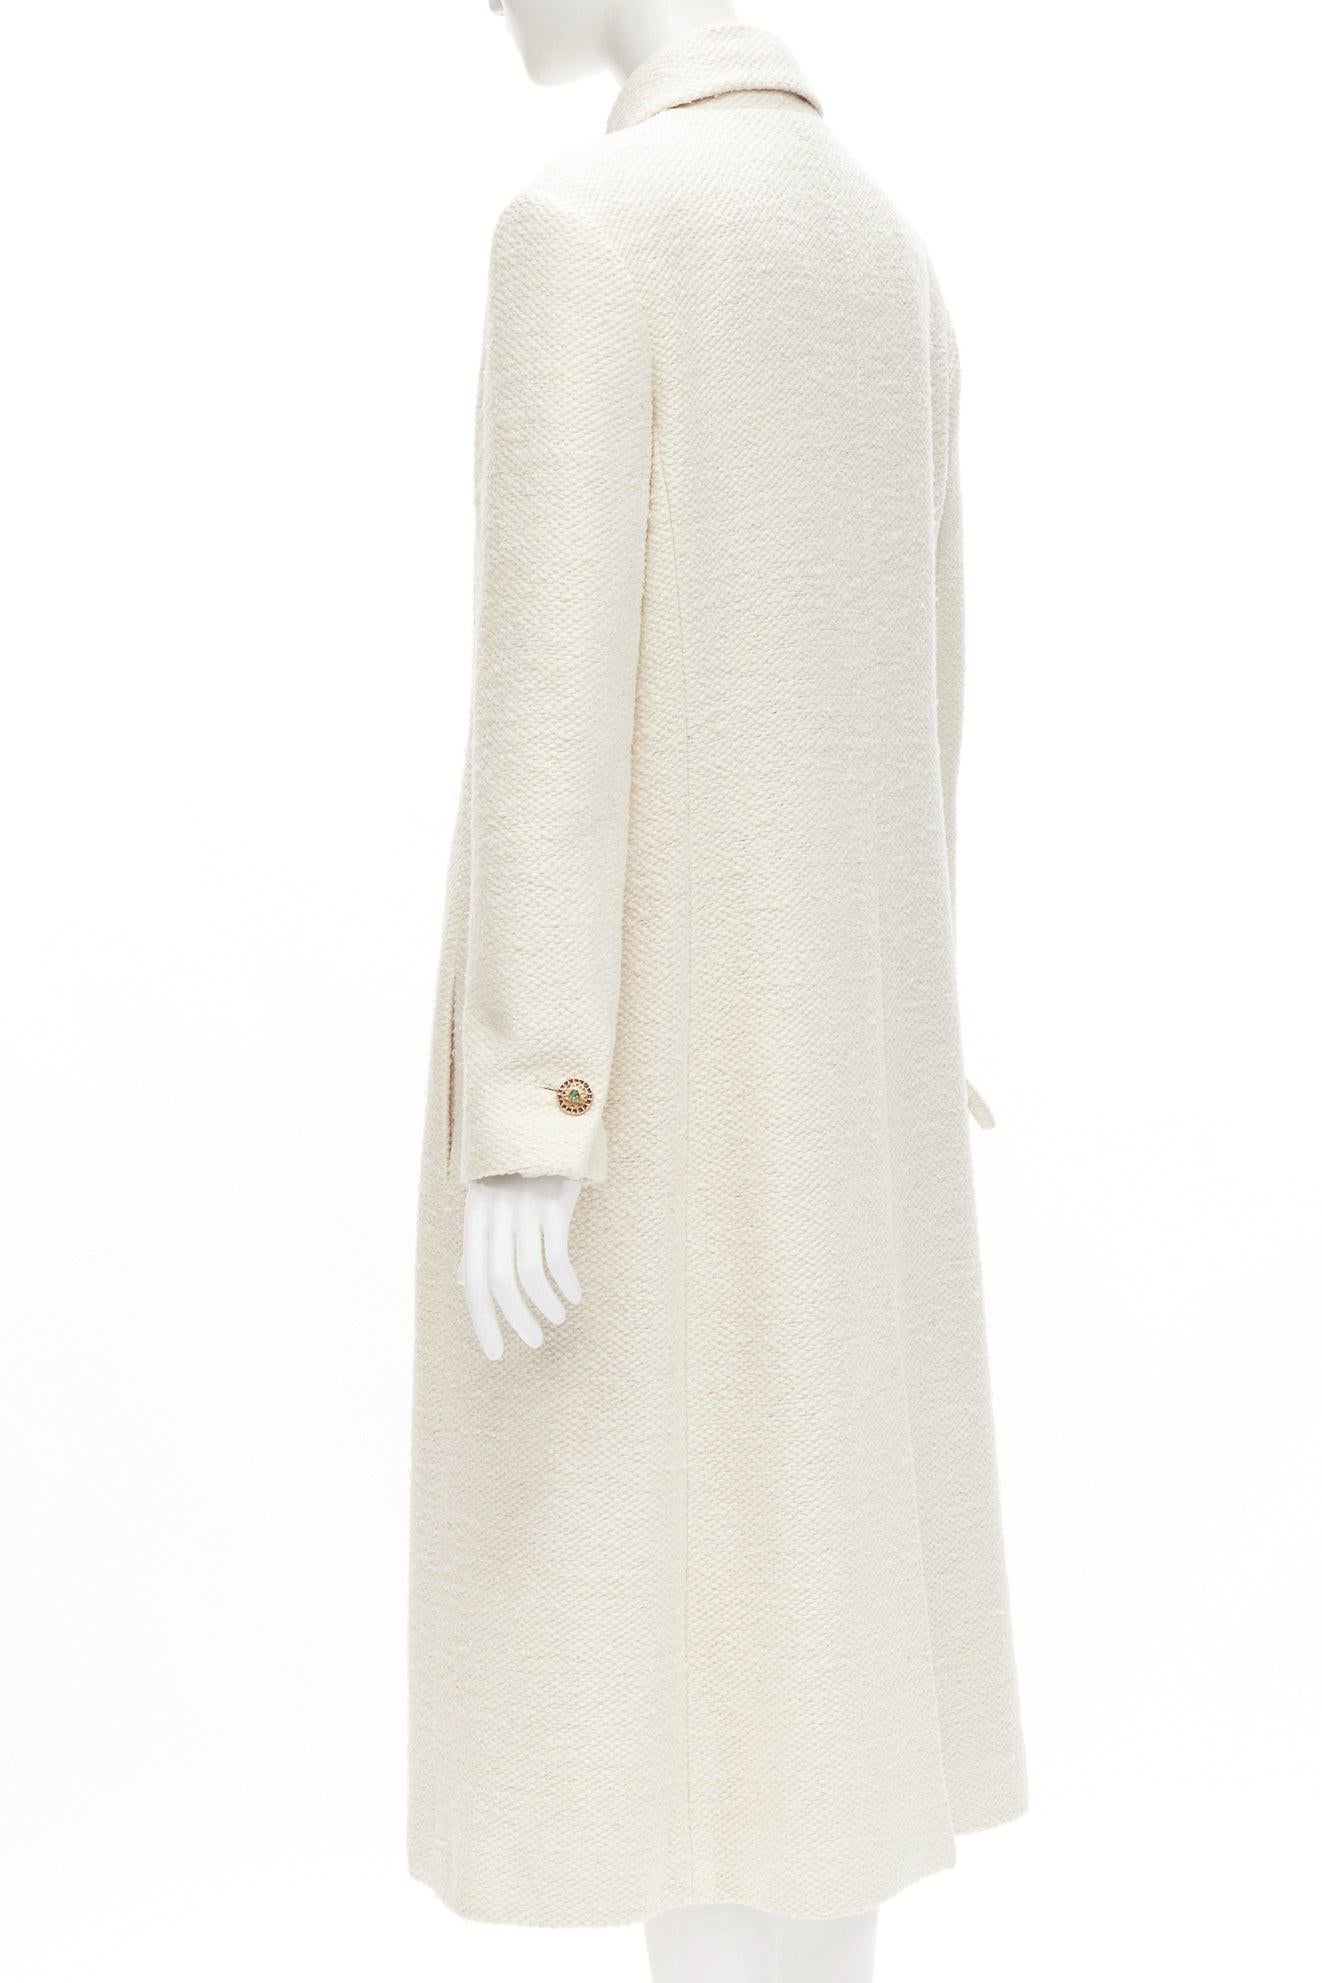 CHANEL 12A Paris Bombay ecru beige wool pink lining enamel button coat L For Sale 3